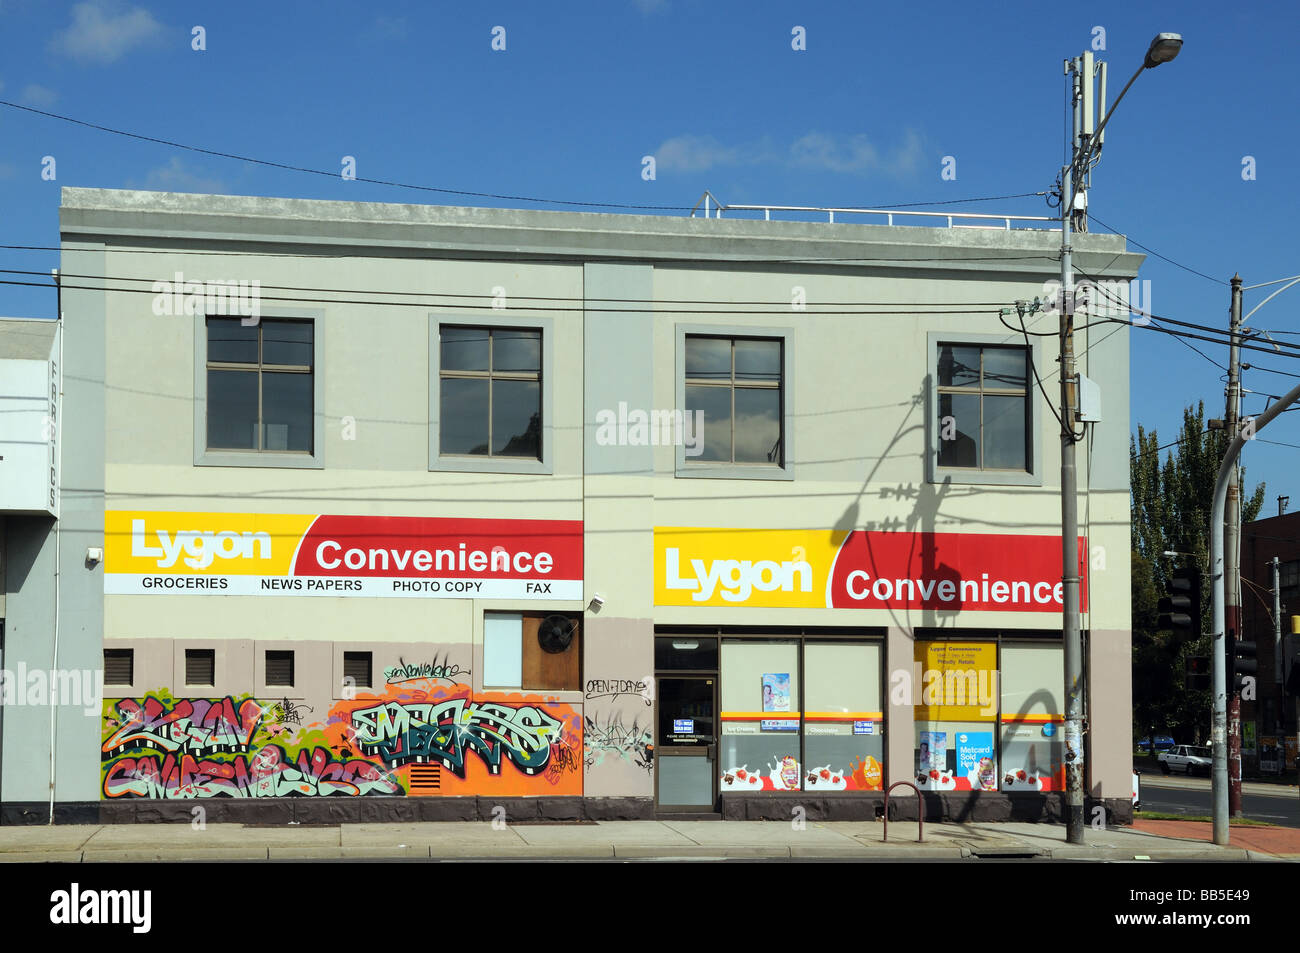 Lygon Convenience Store with colourful graffiti Lygon Street Carlton Melbourne Australia Stock Photo